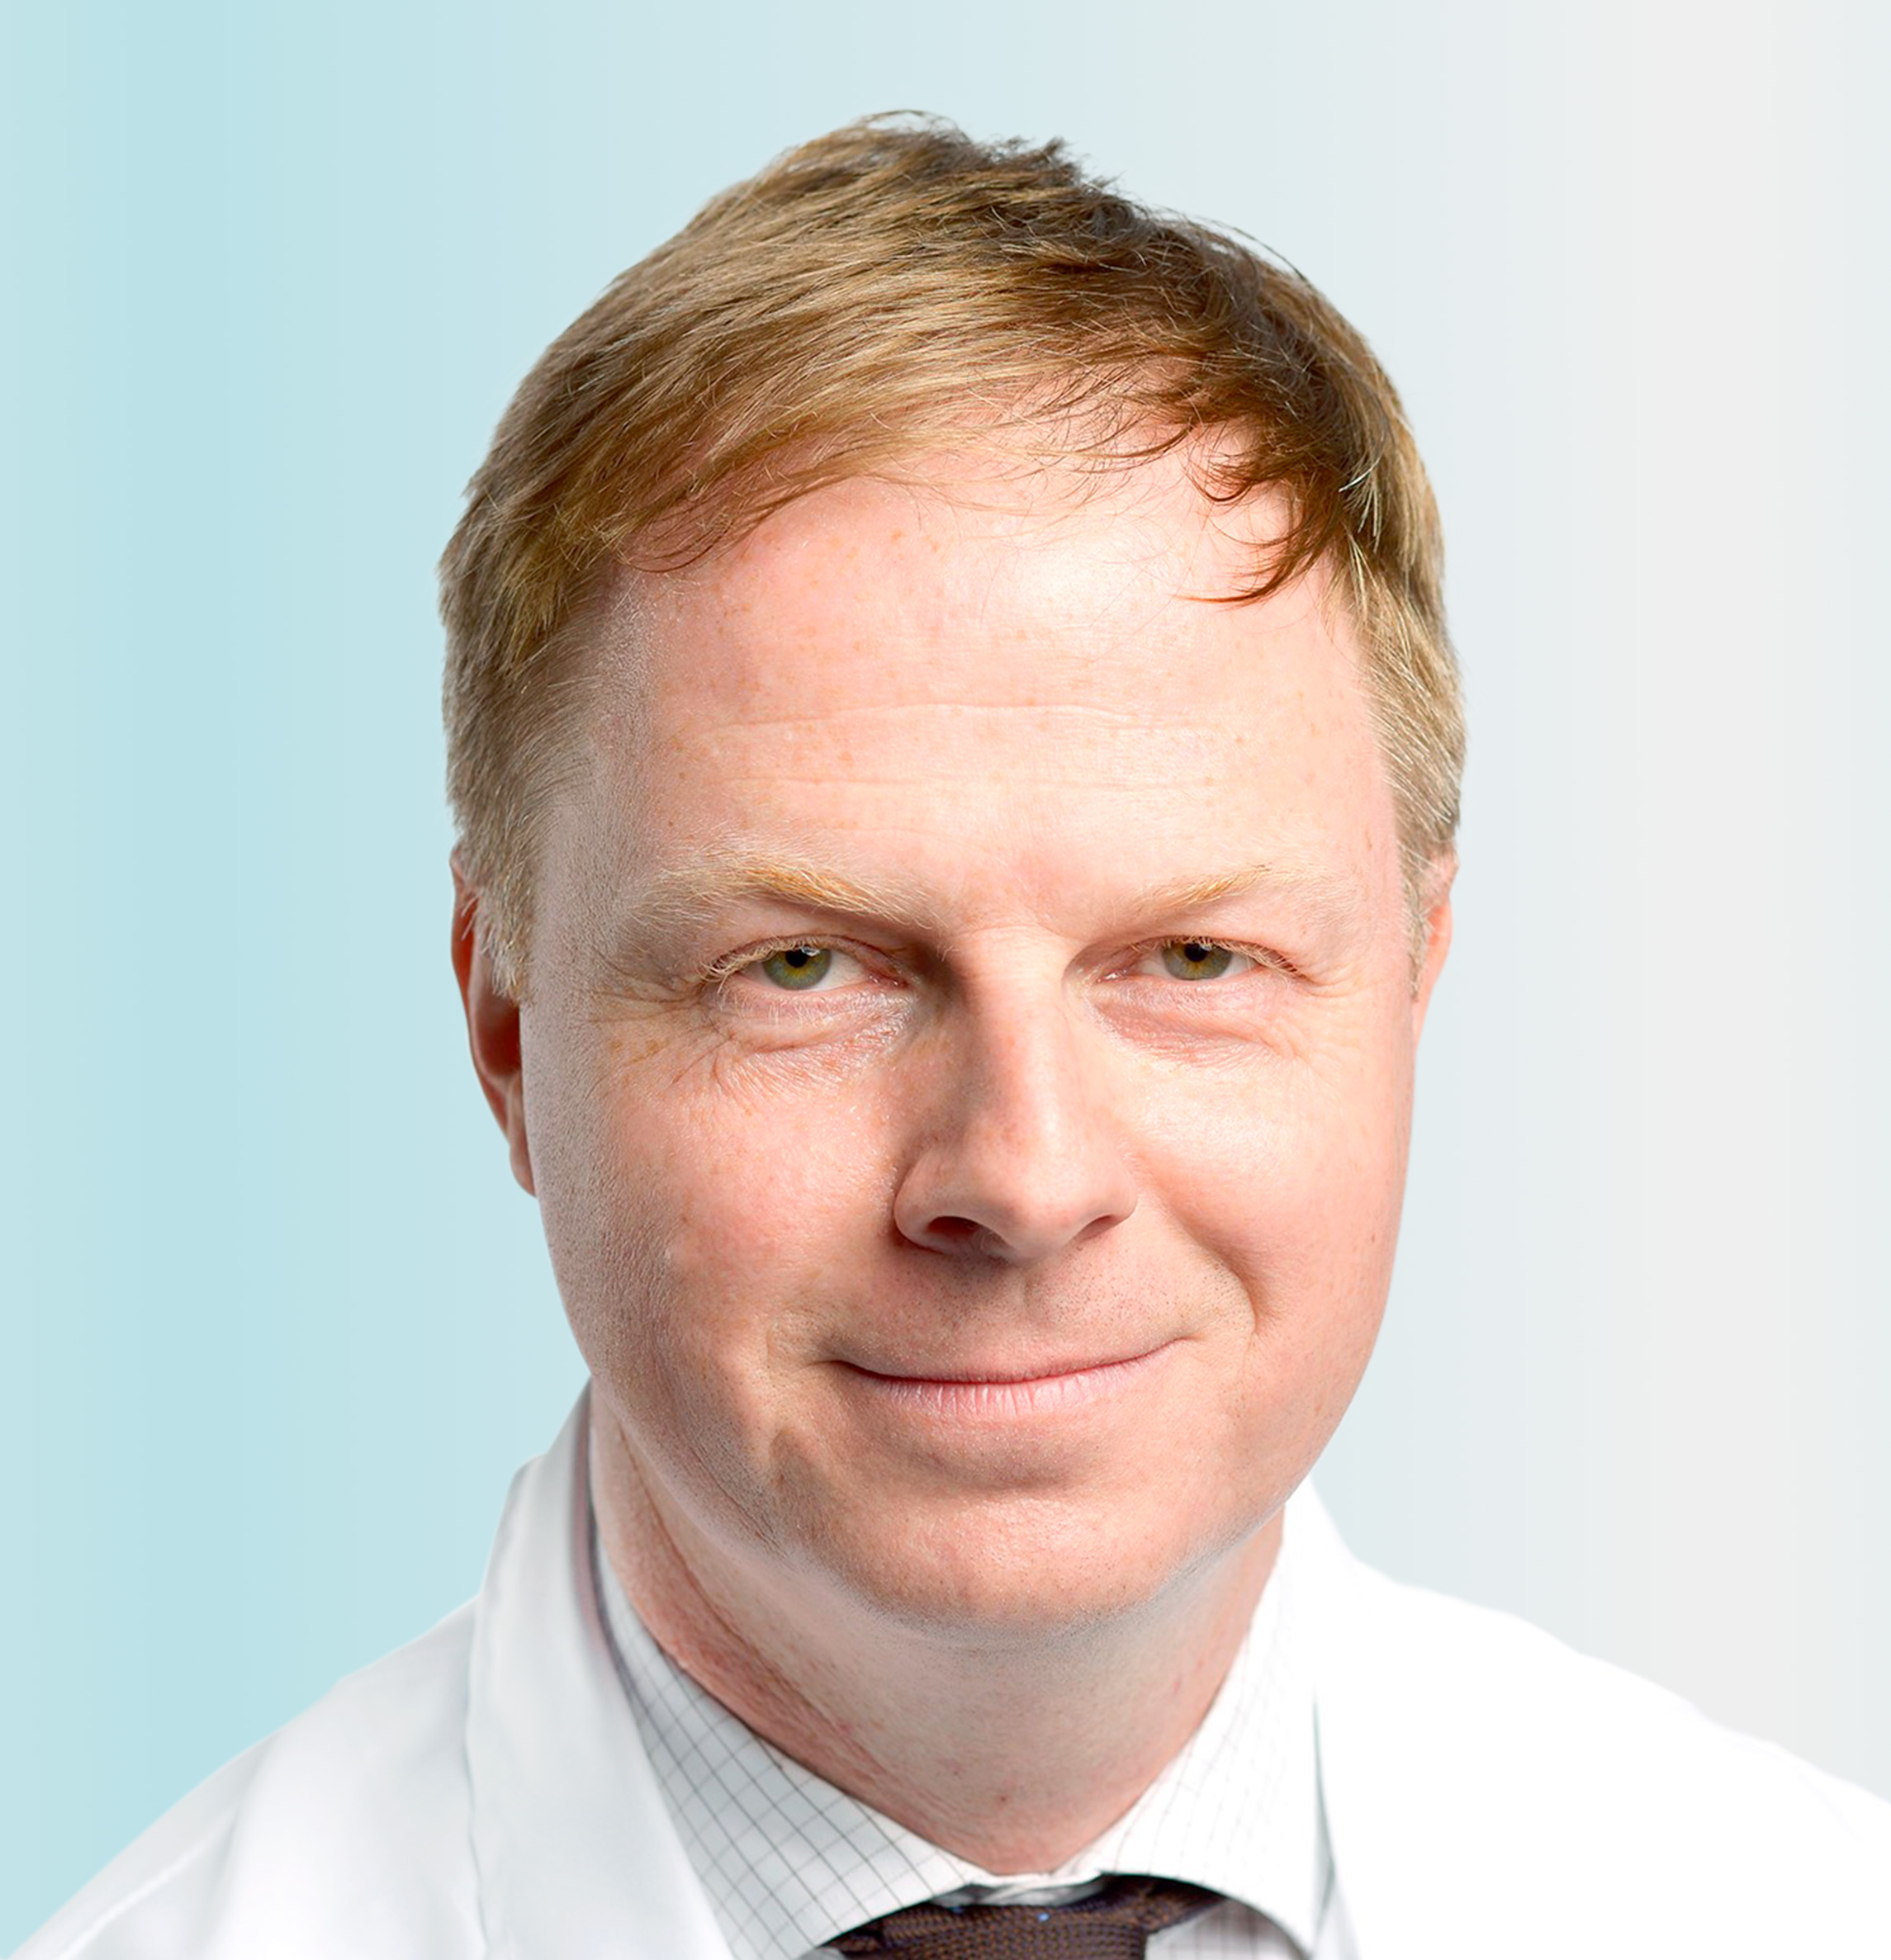 Dermatologo, Dr. med. Siegfried Borelli